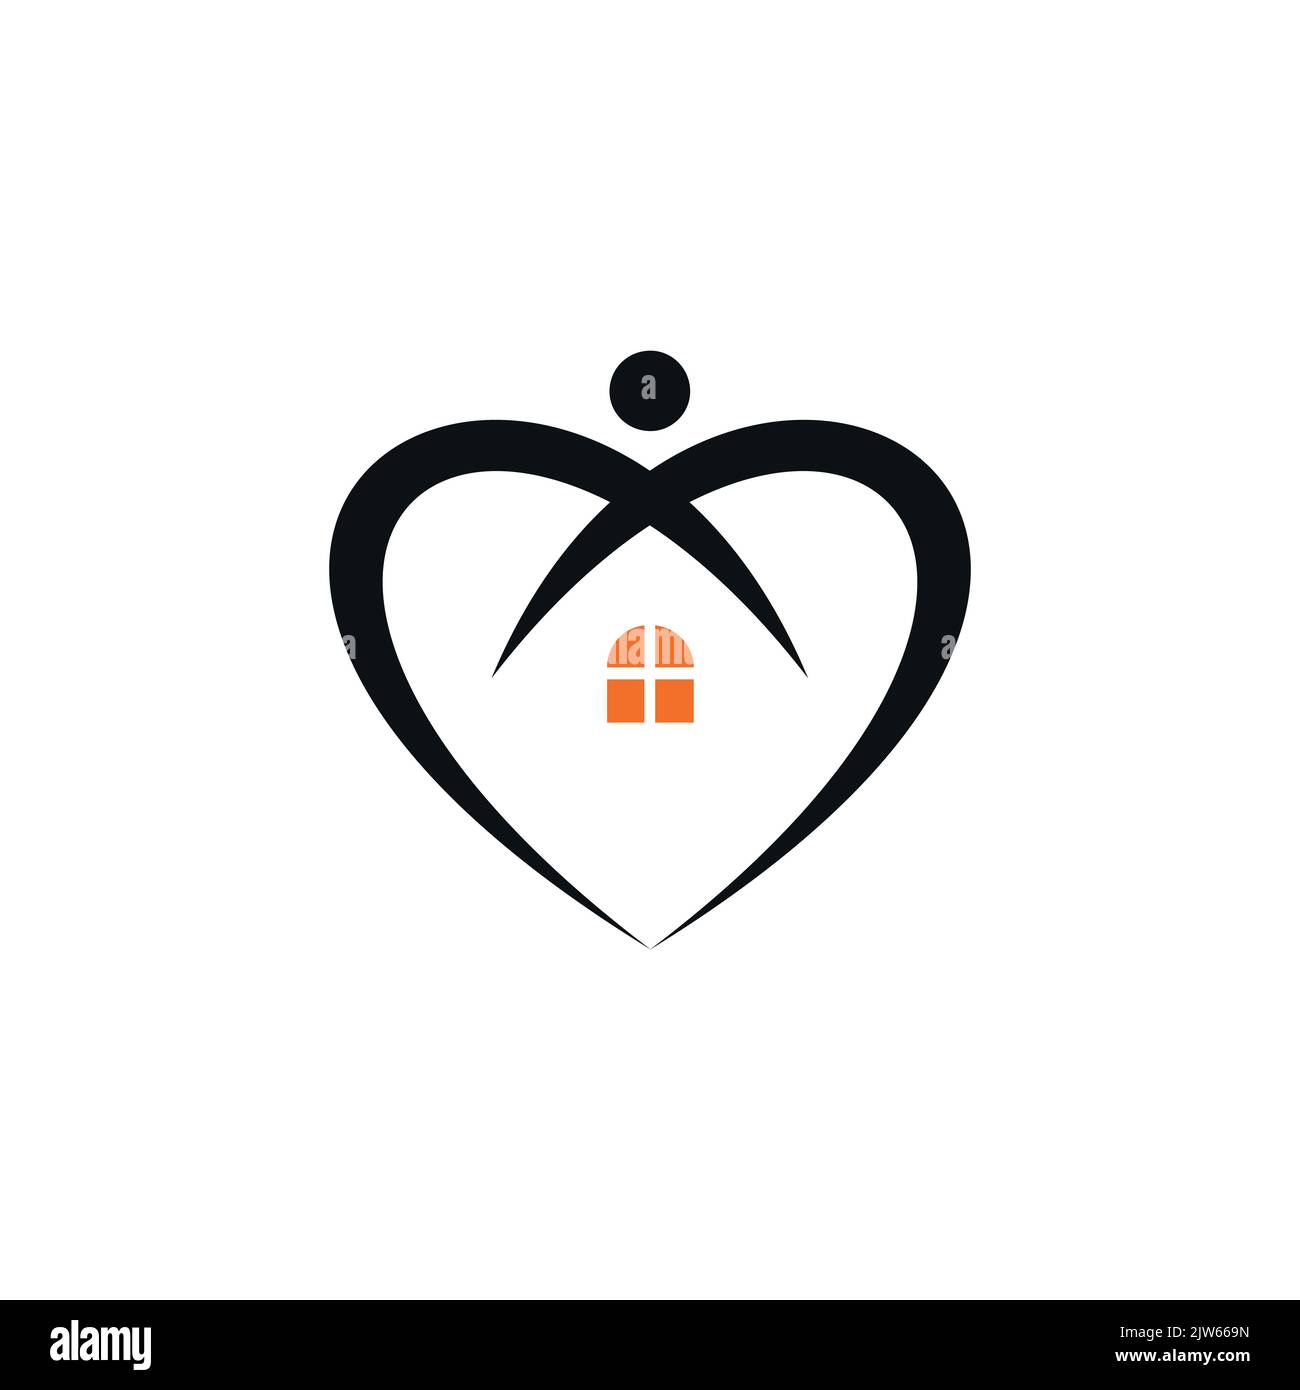 people love home logo icon vector graphic design Stock Vector